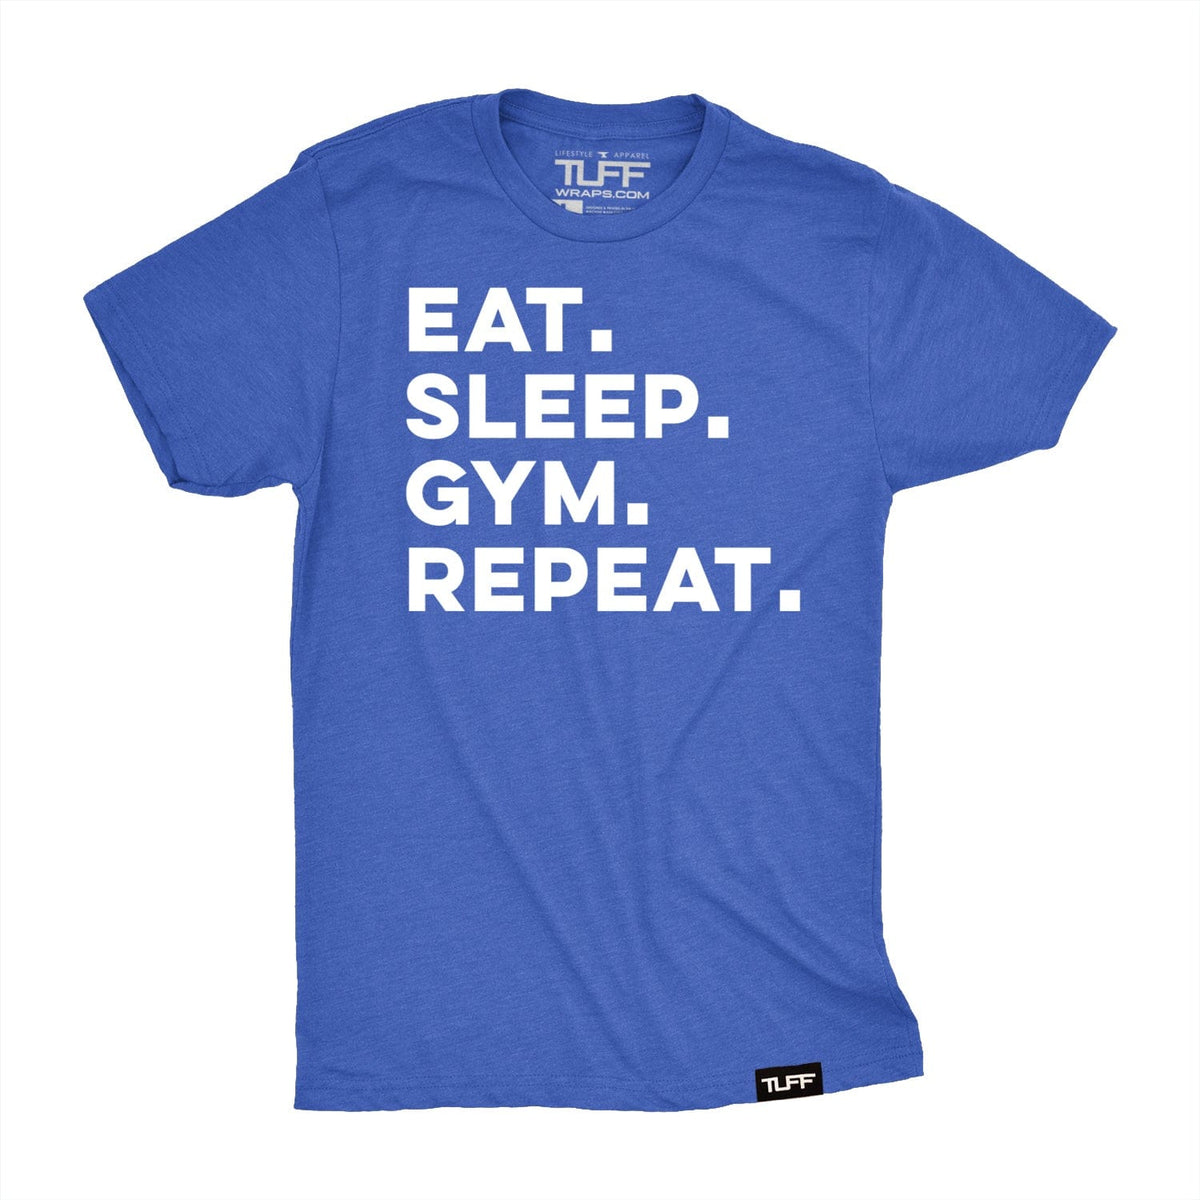 Eat. Sleep. Gym. Repeat. Tee S / Vintage Blue TuffWraps.com